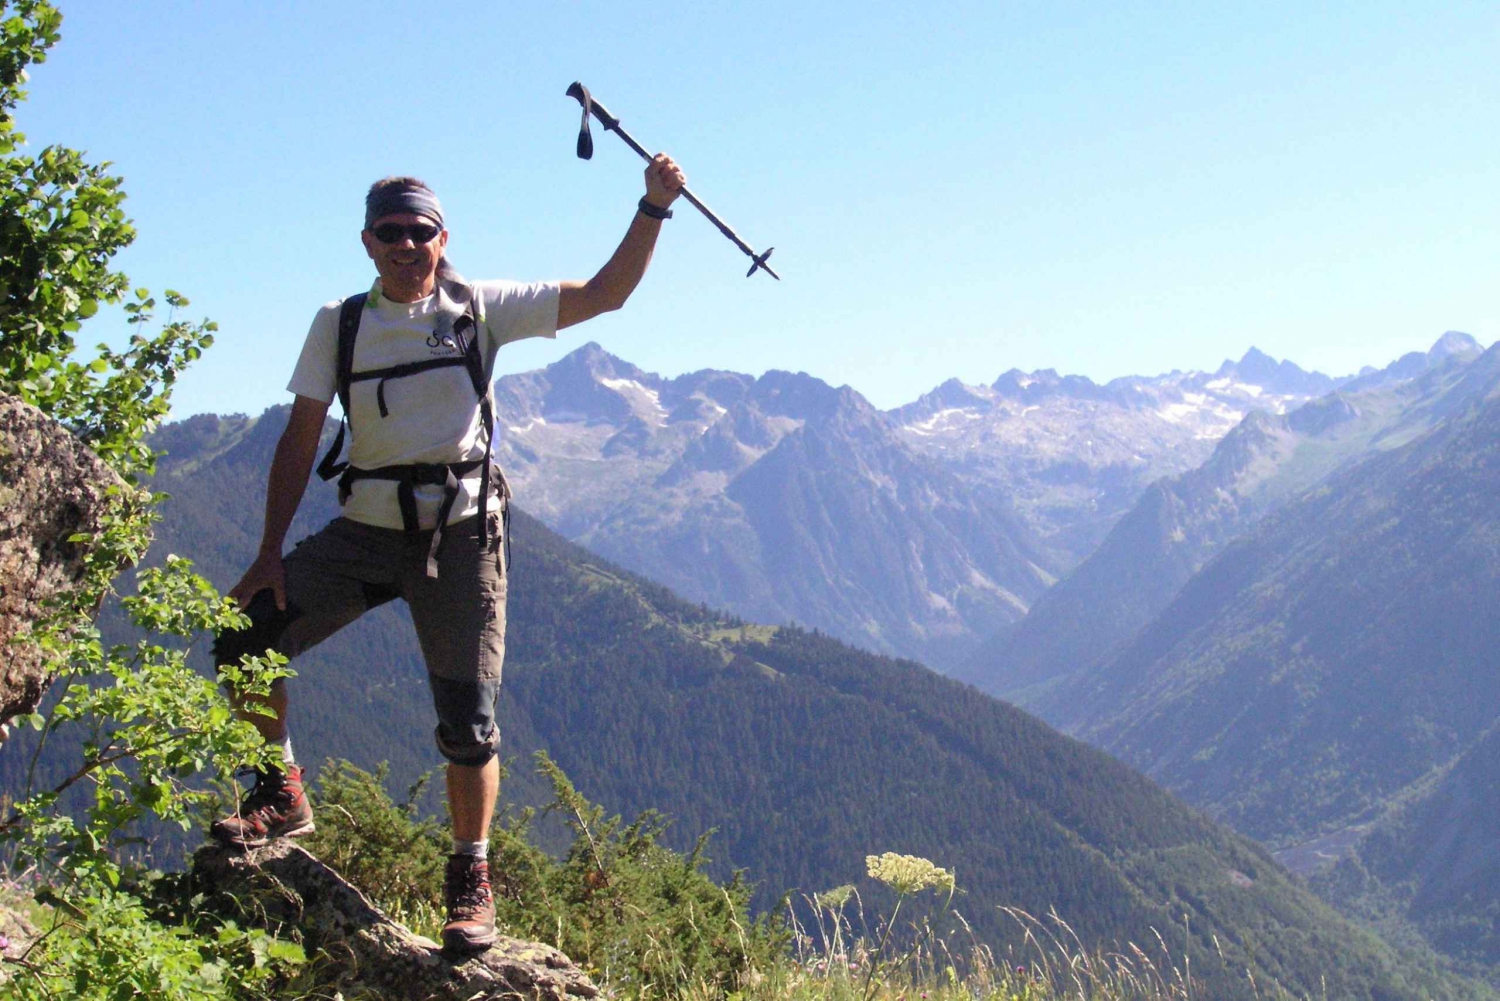 Pyrenéerna: En dags vandring med ett val av 3 nivåer